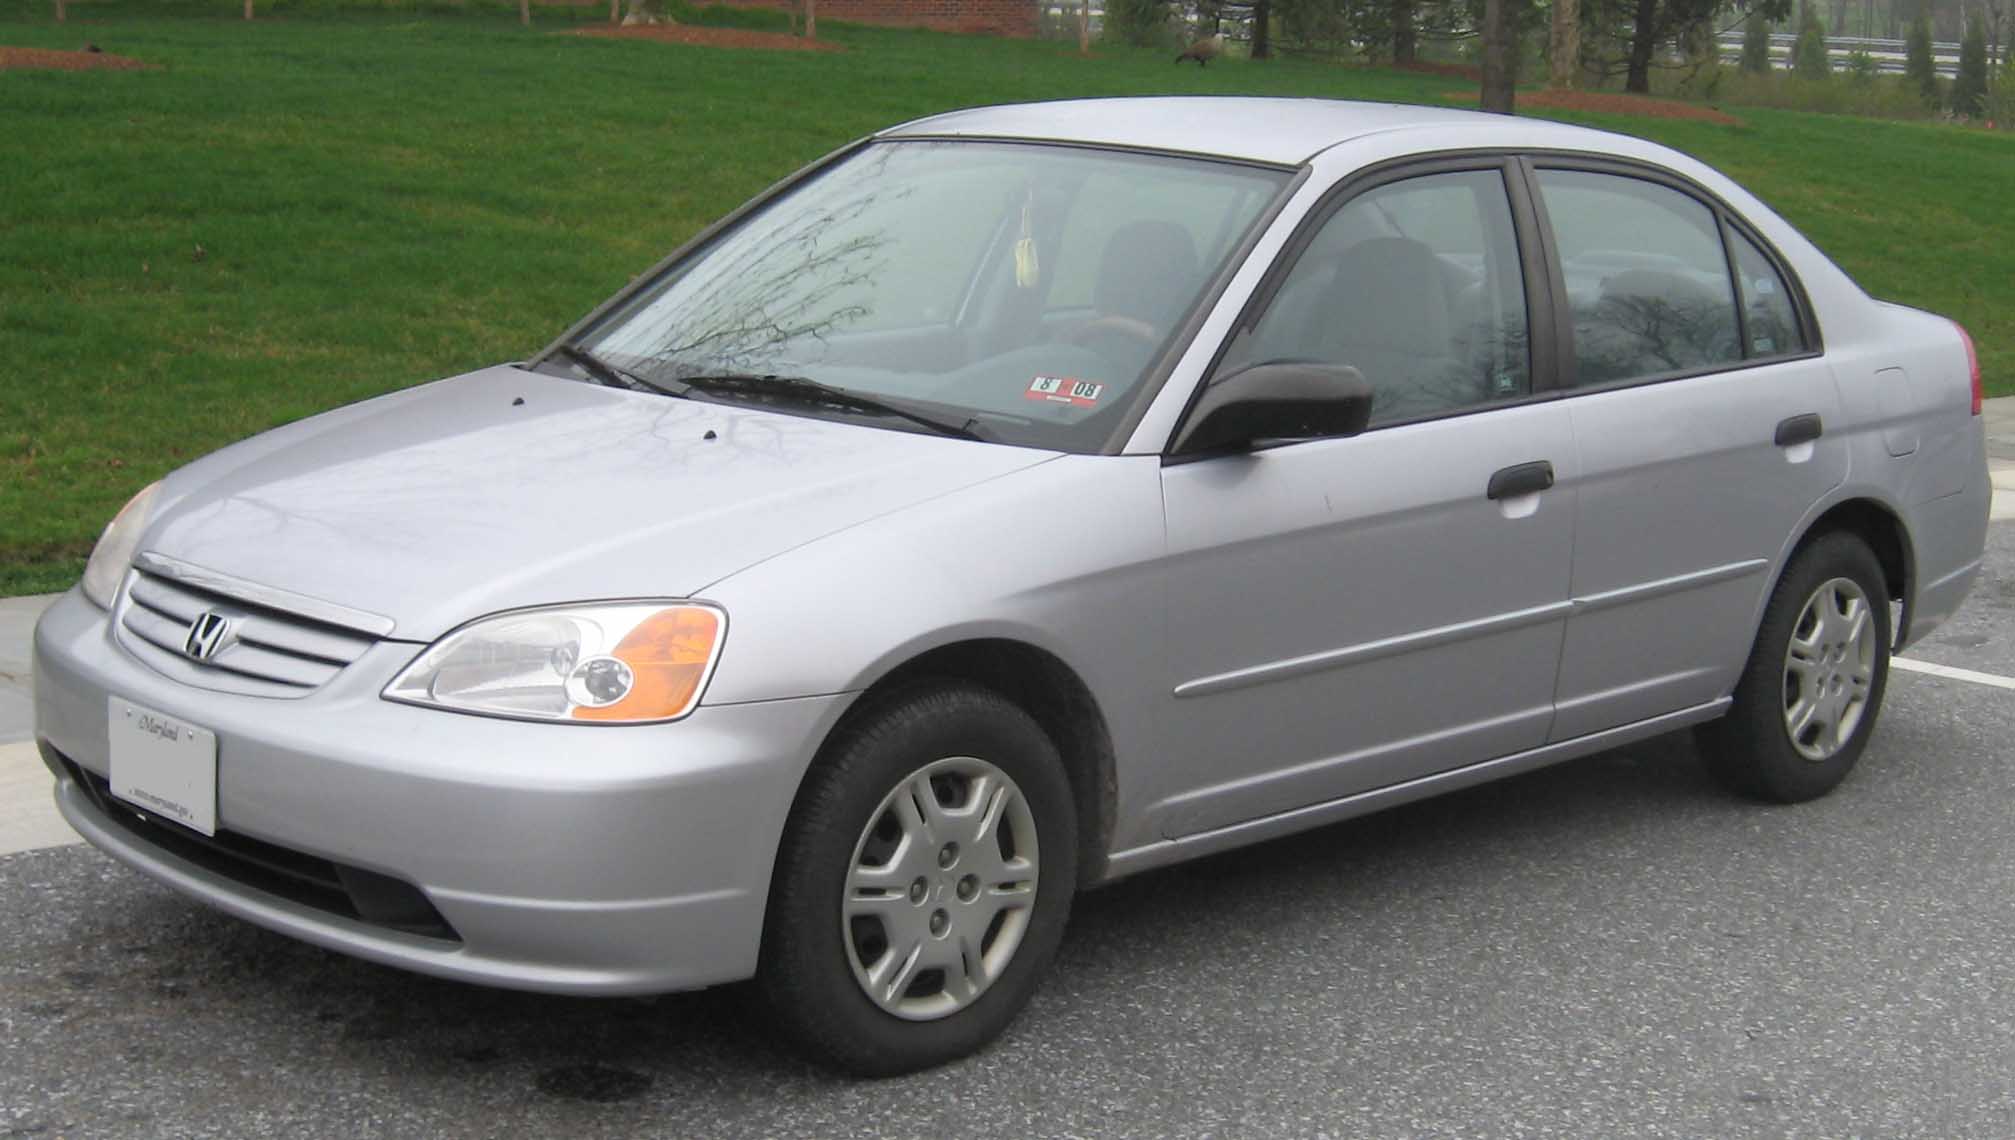 2003 Civic #1